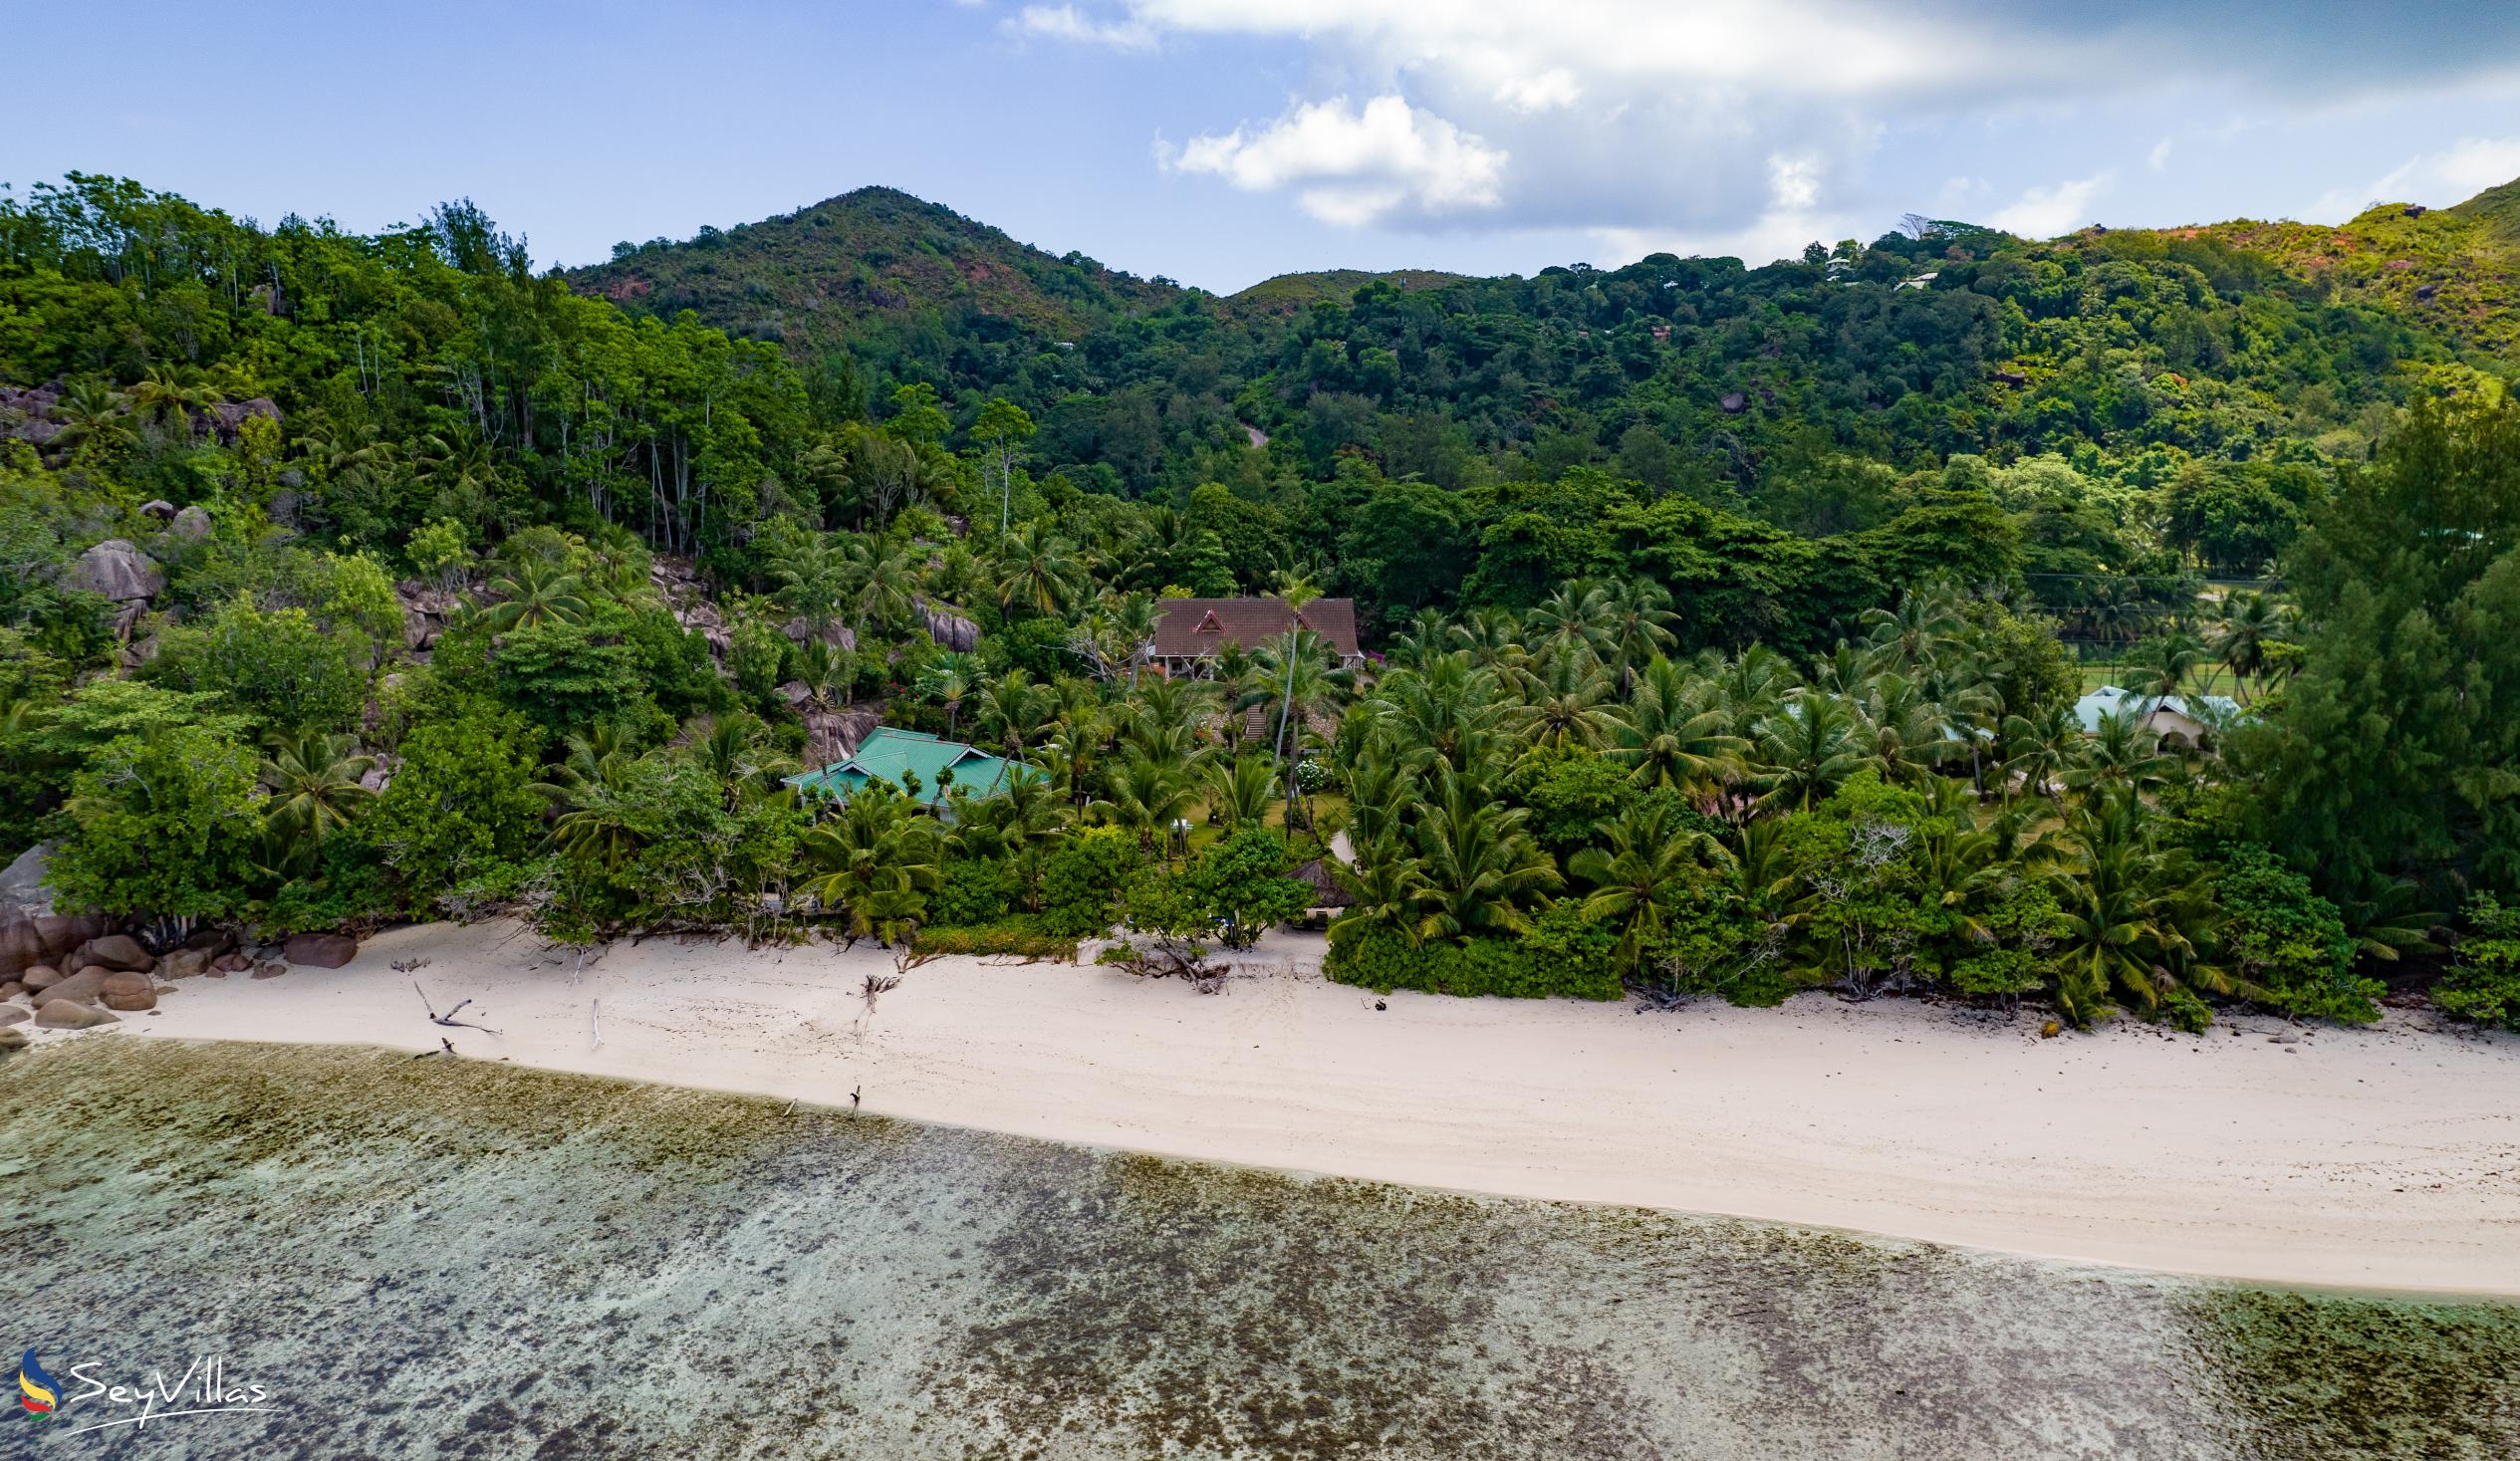 Photo 2: Villas du Voyageur - Outdoor area - Praslin (Seychelles)